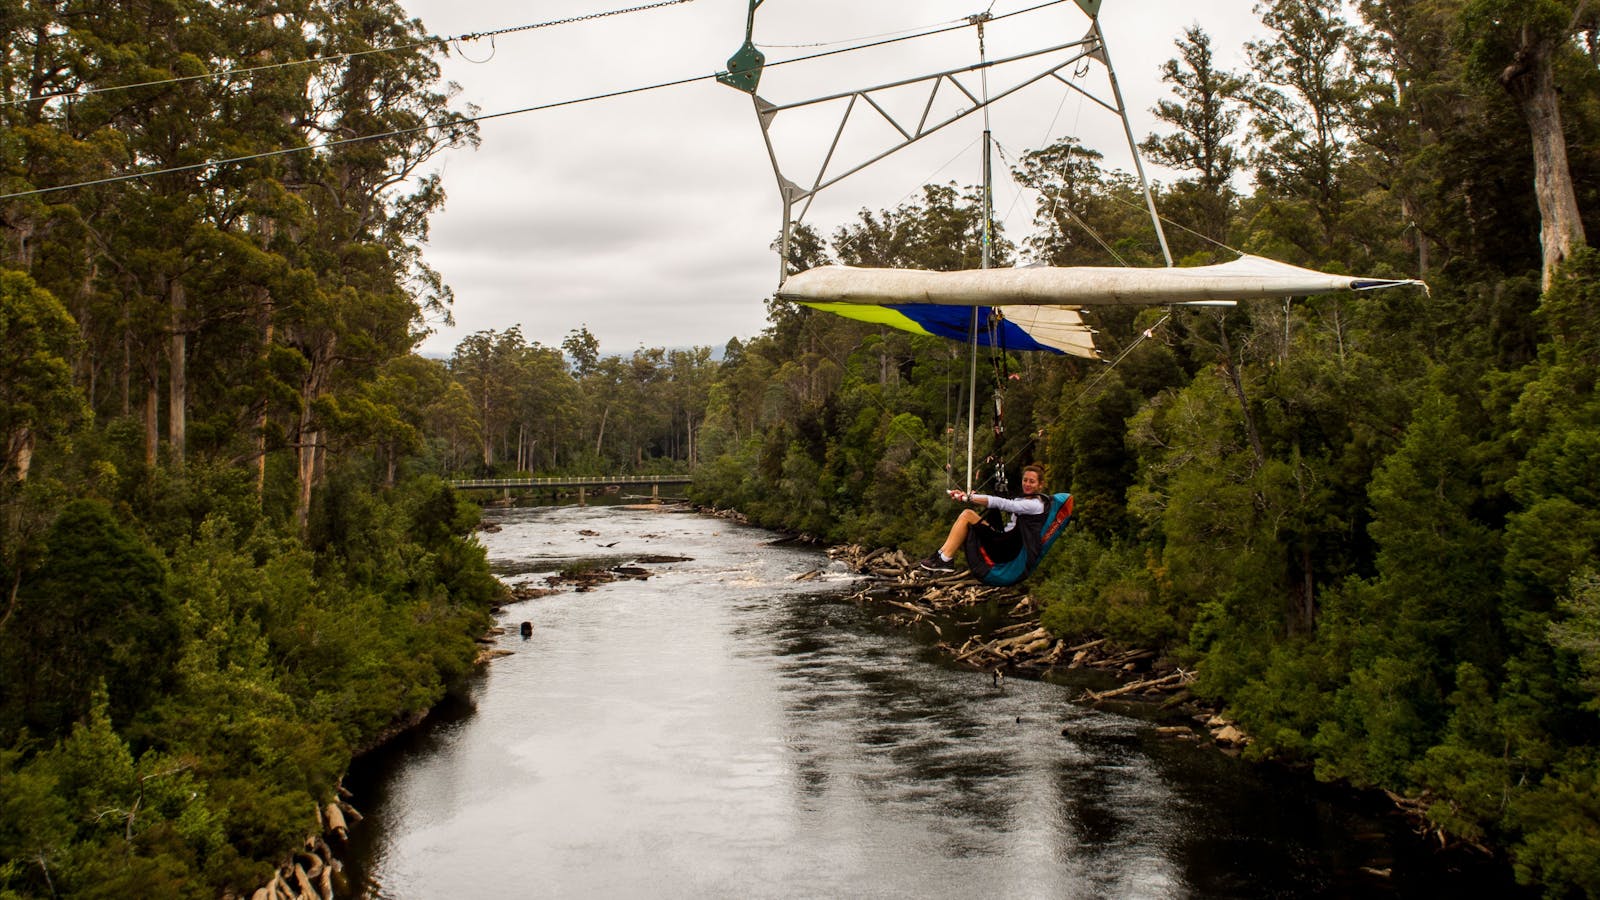 Eagle Hang Glider located at Tahune Adventures Tasmania